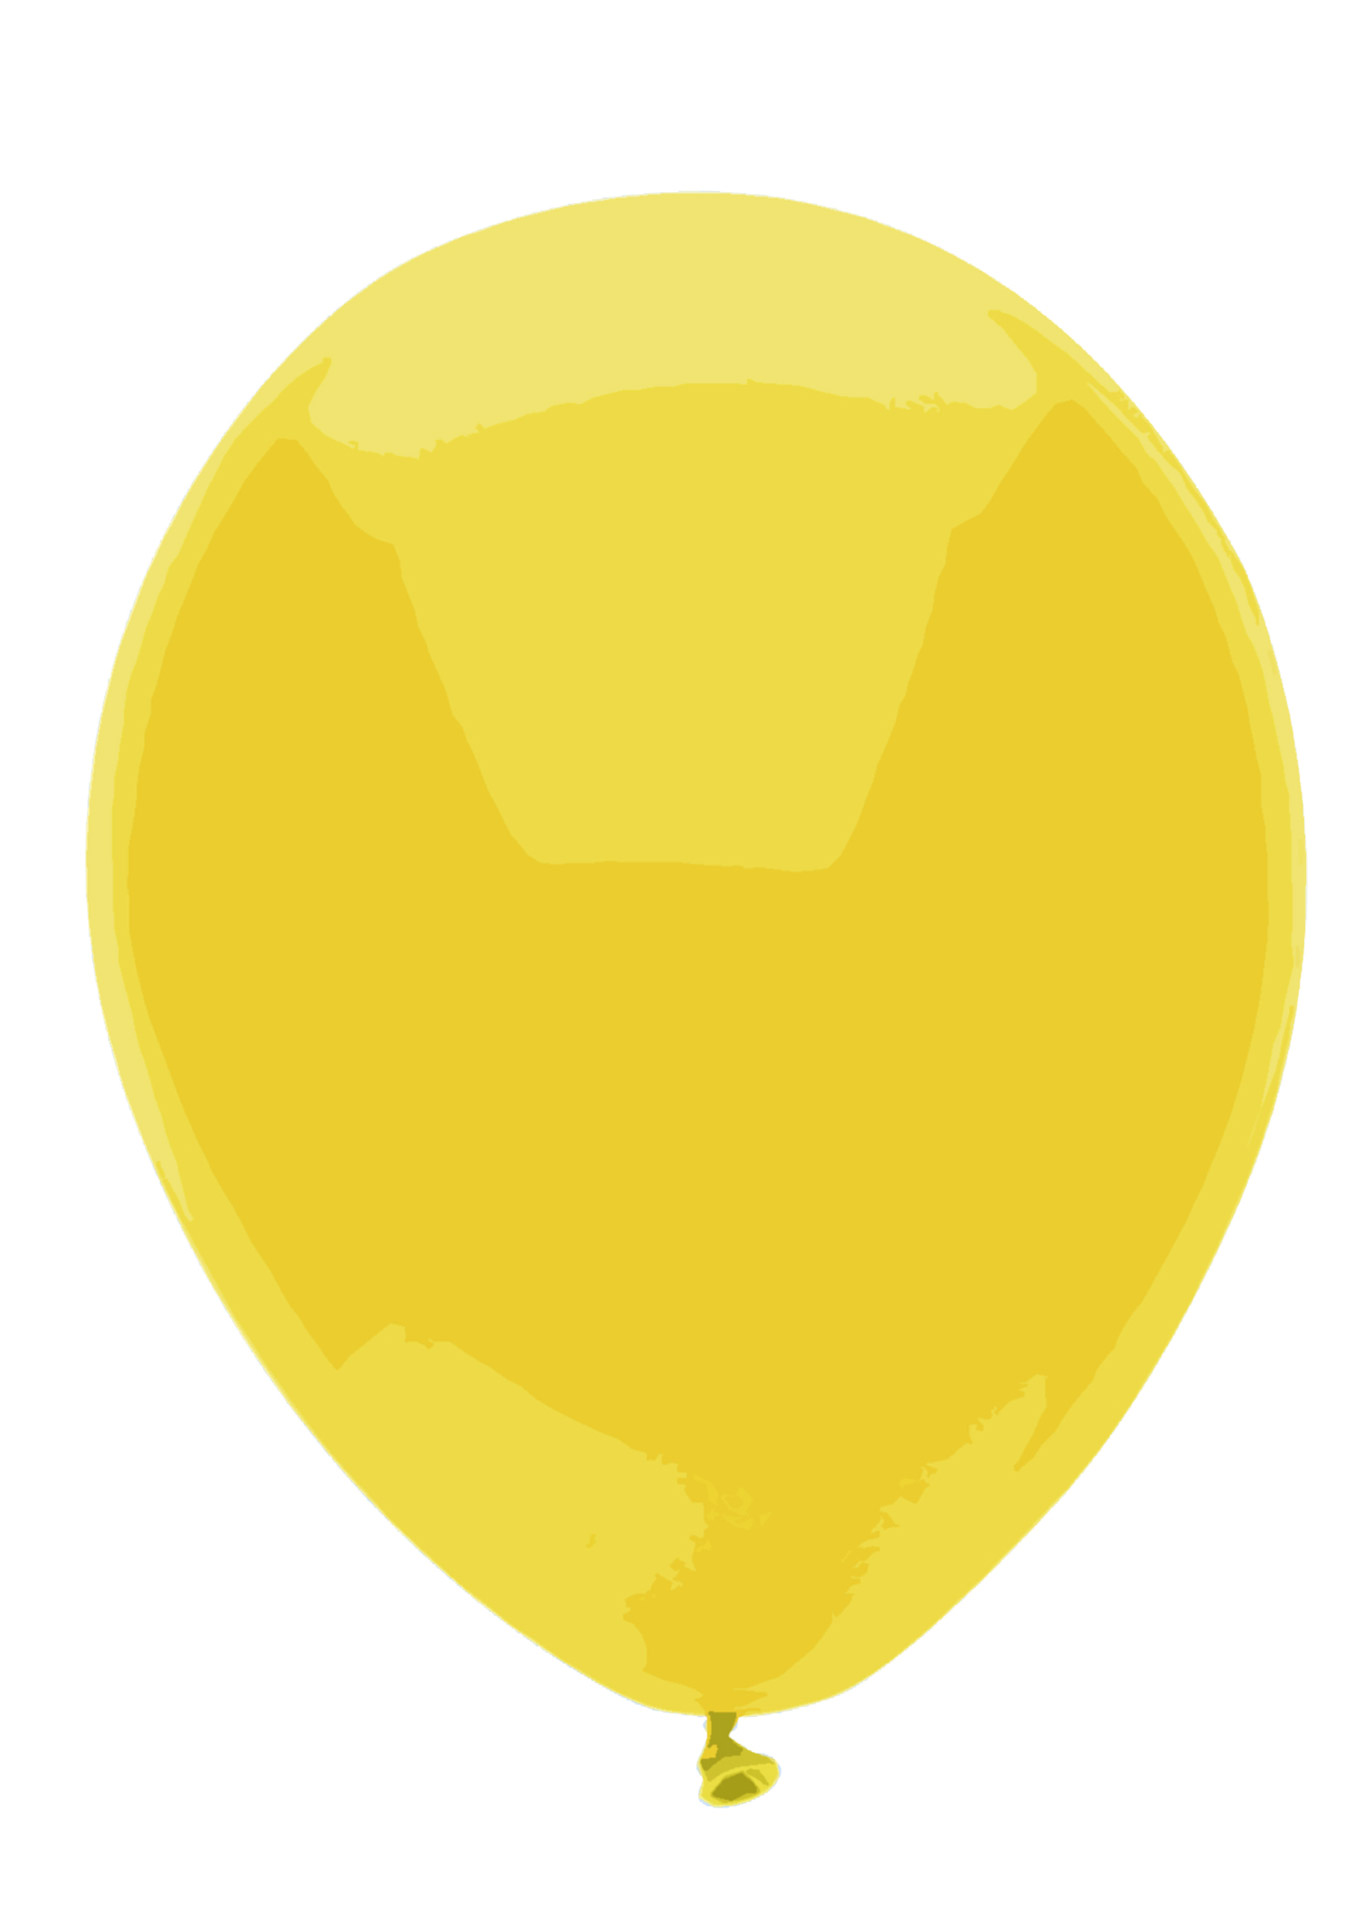 clipart yellow balloons - photo #30